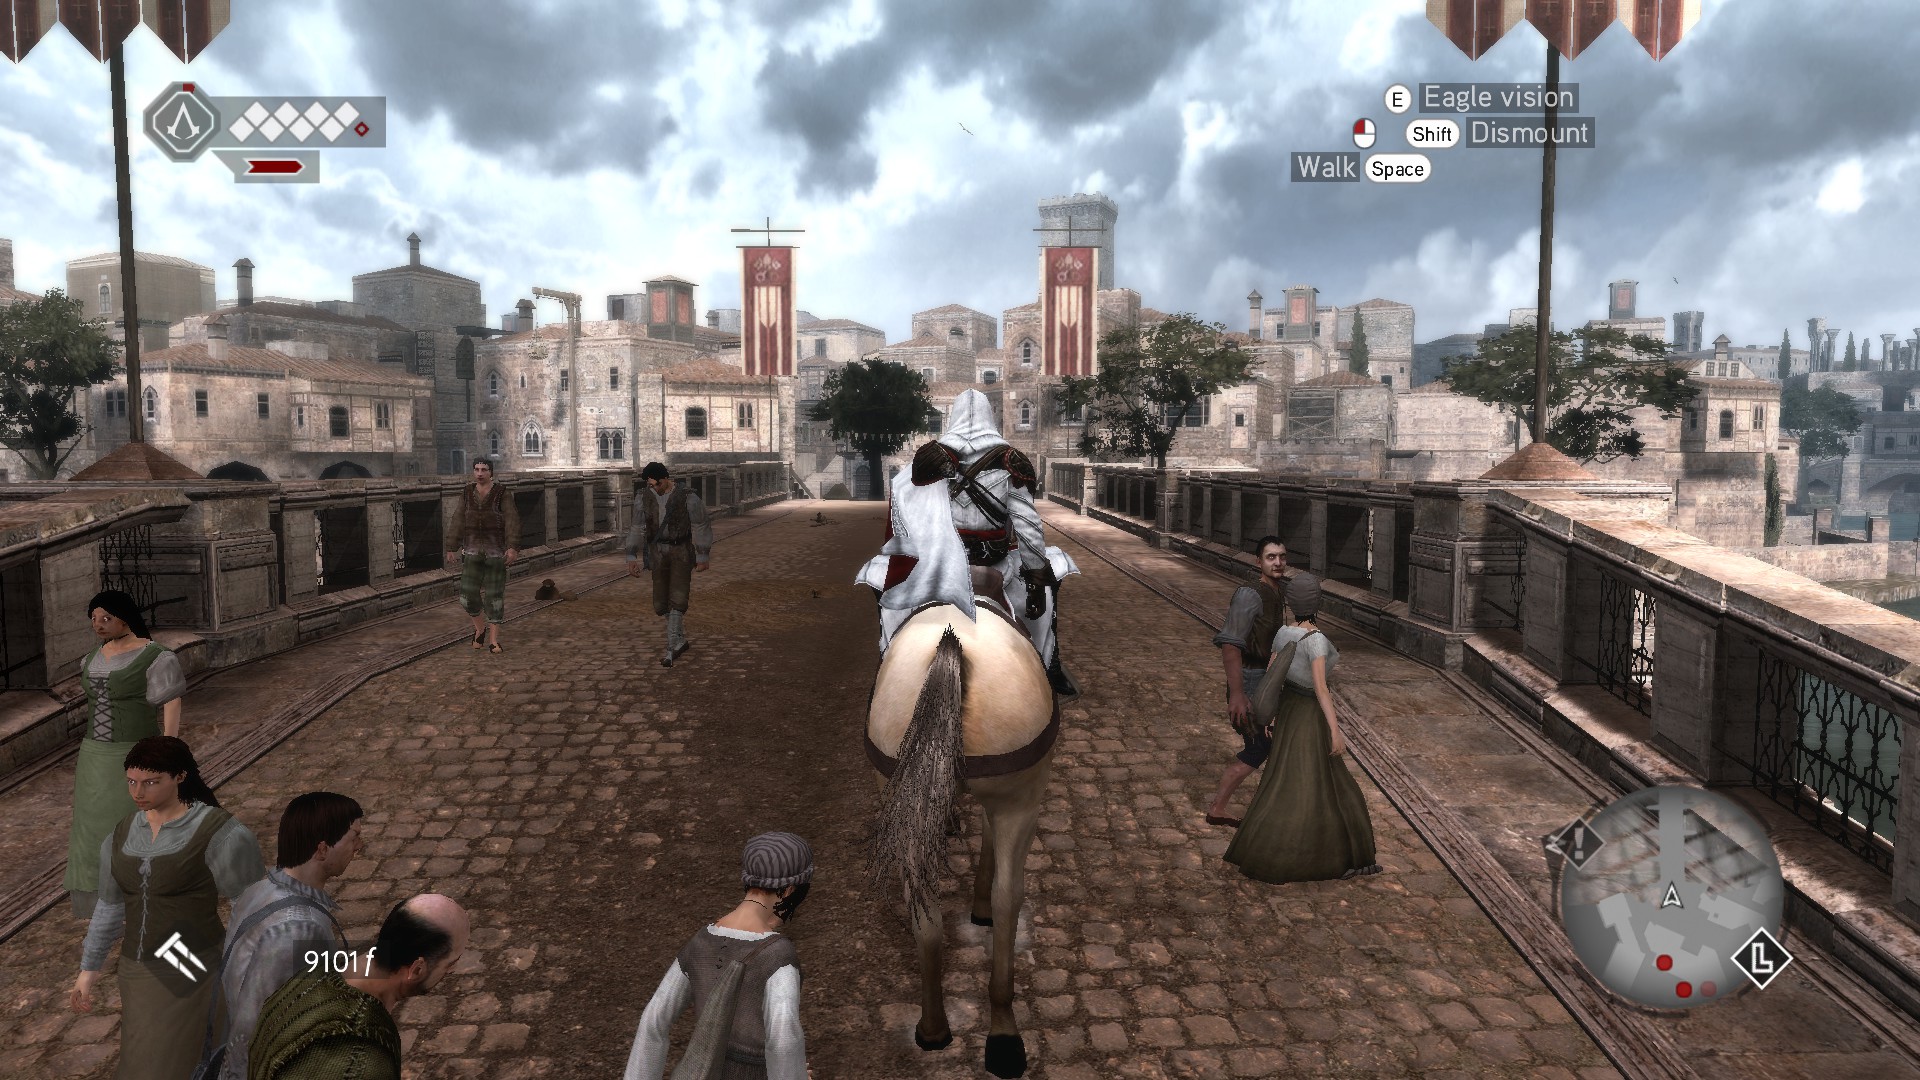 Assassin's Creed: Brotherhood (Video Game 2010) - IMDb